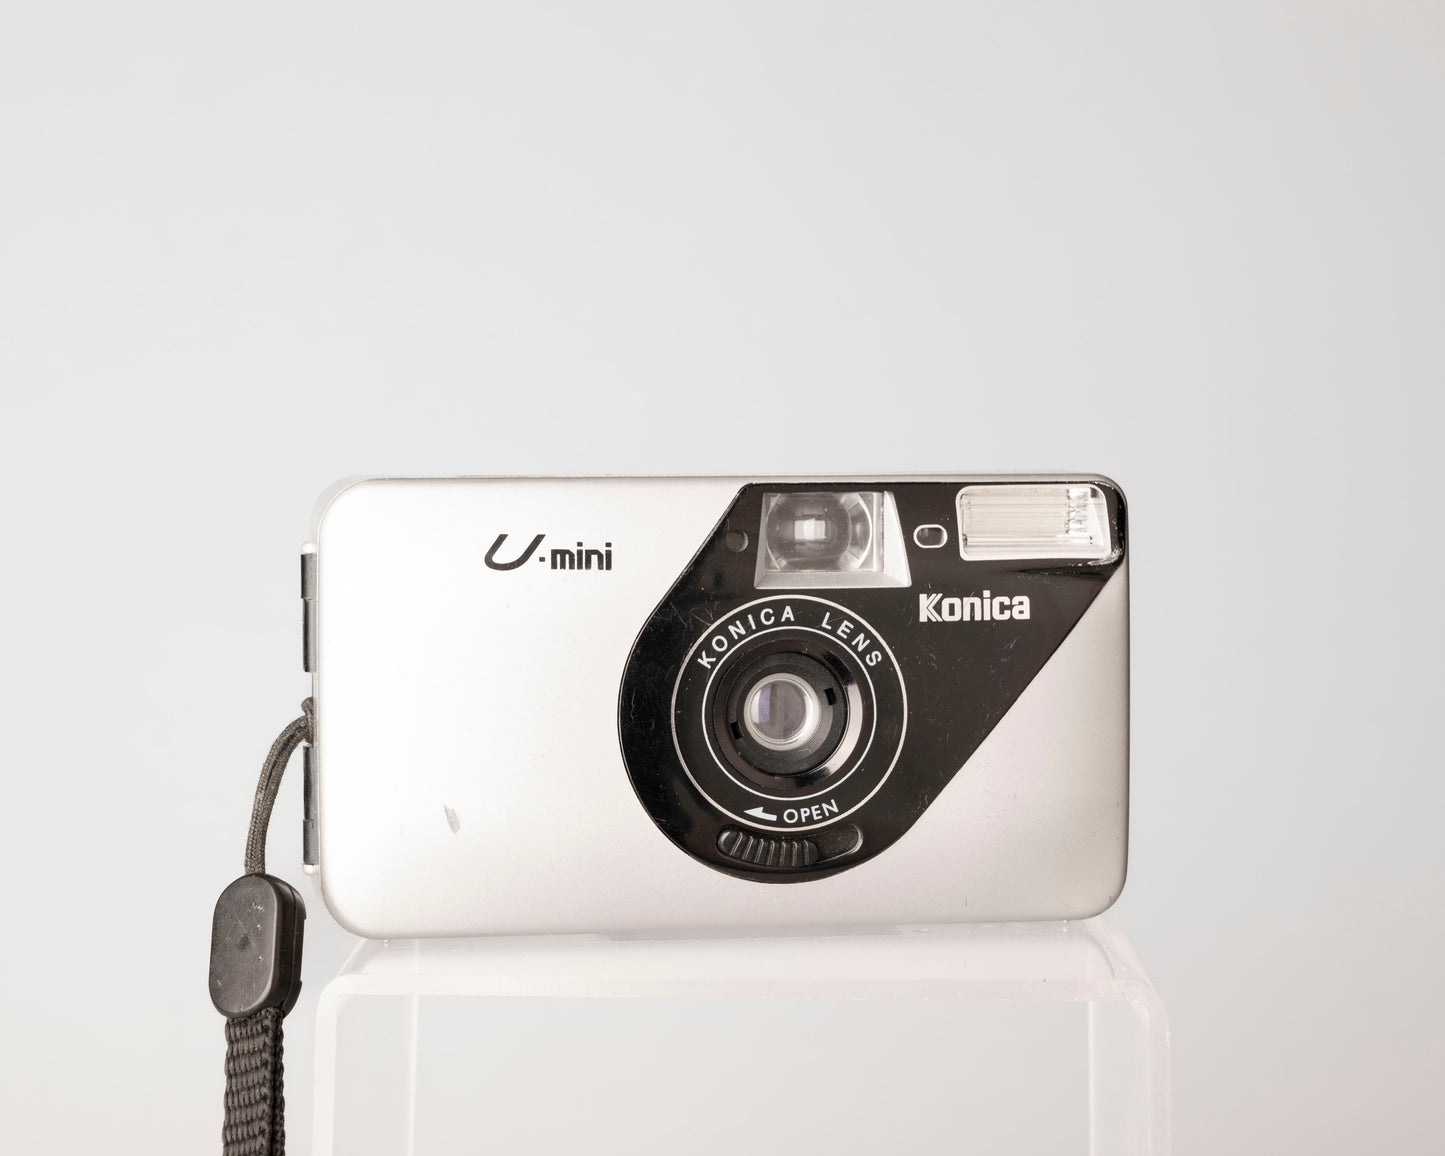 Konica U-mini ultra compact 35mm camera w/ box and manual (serial 3314218)